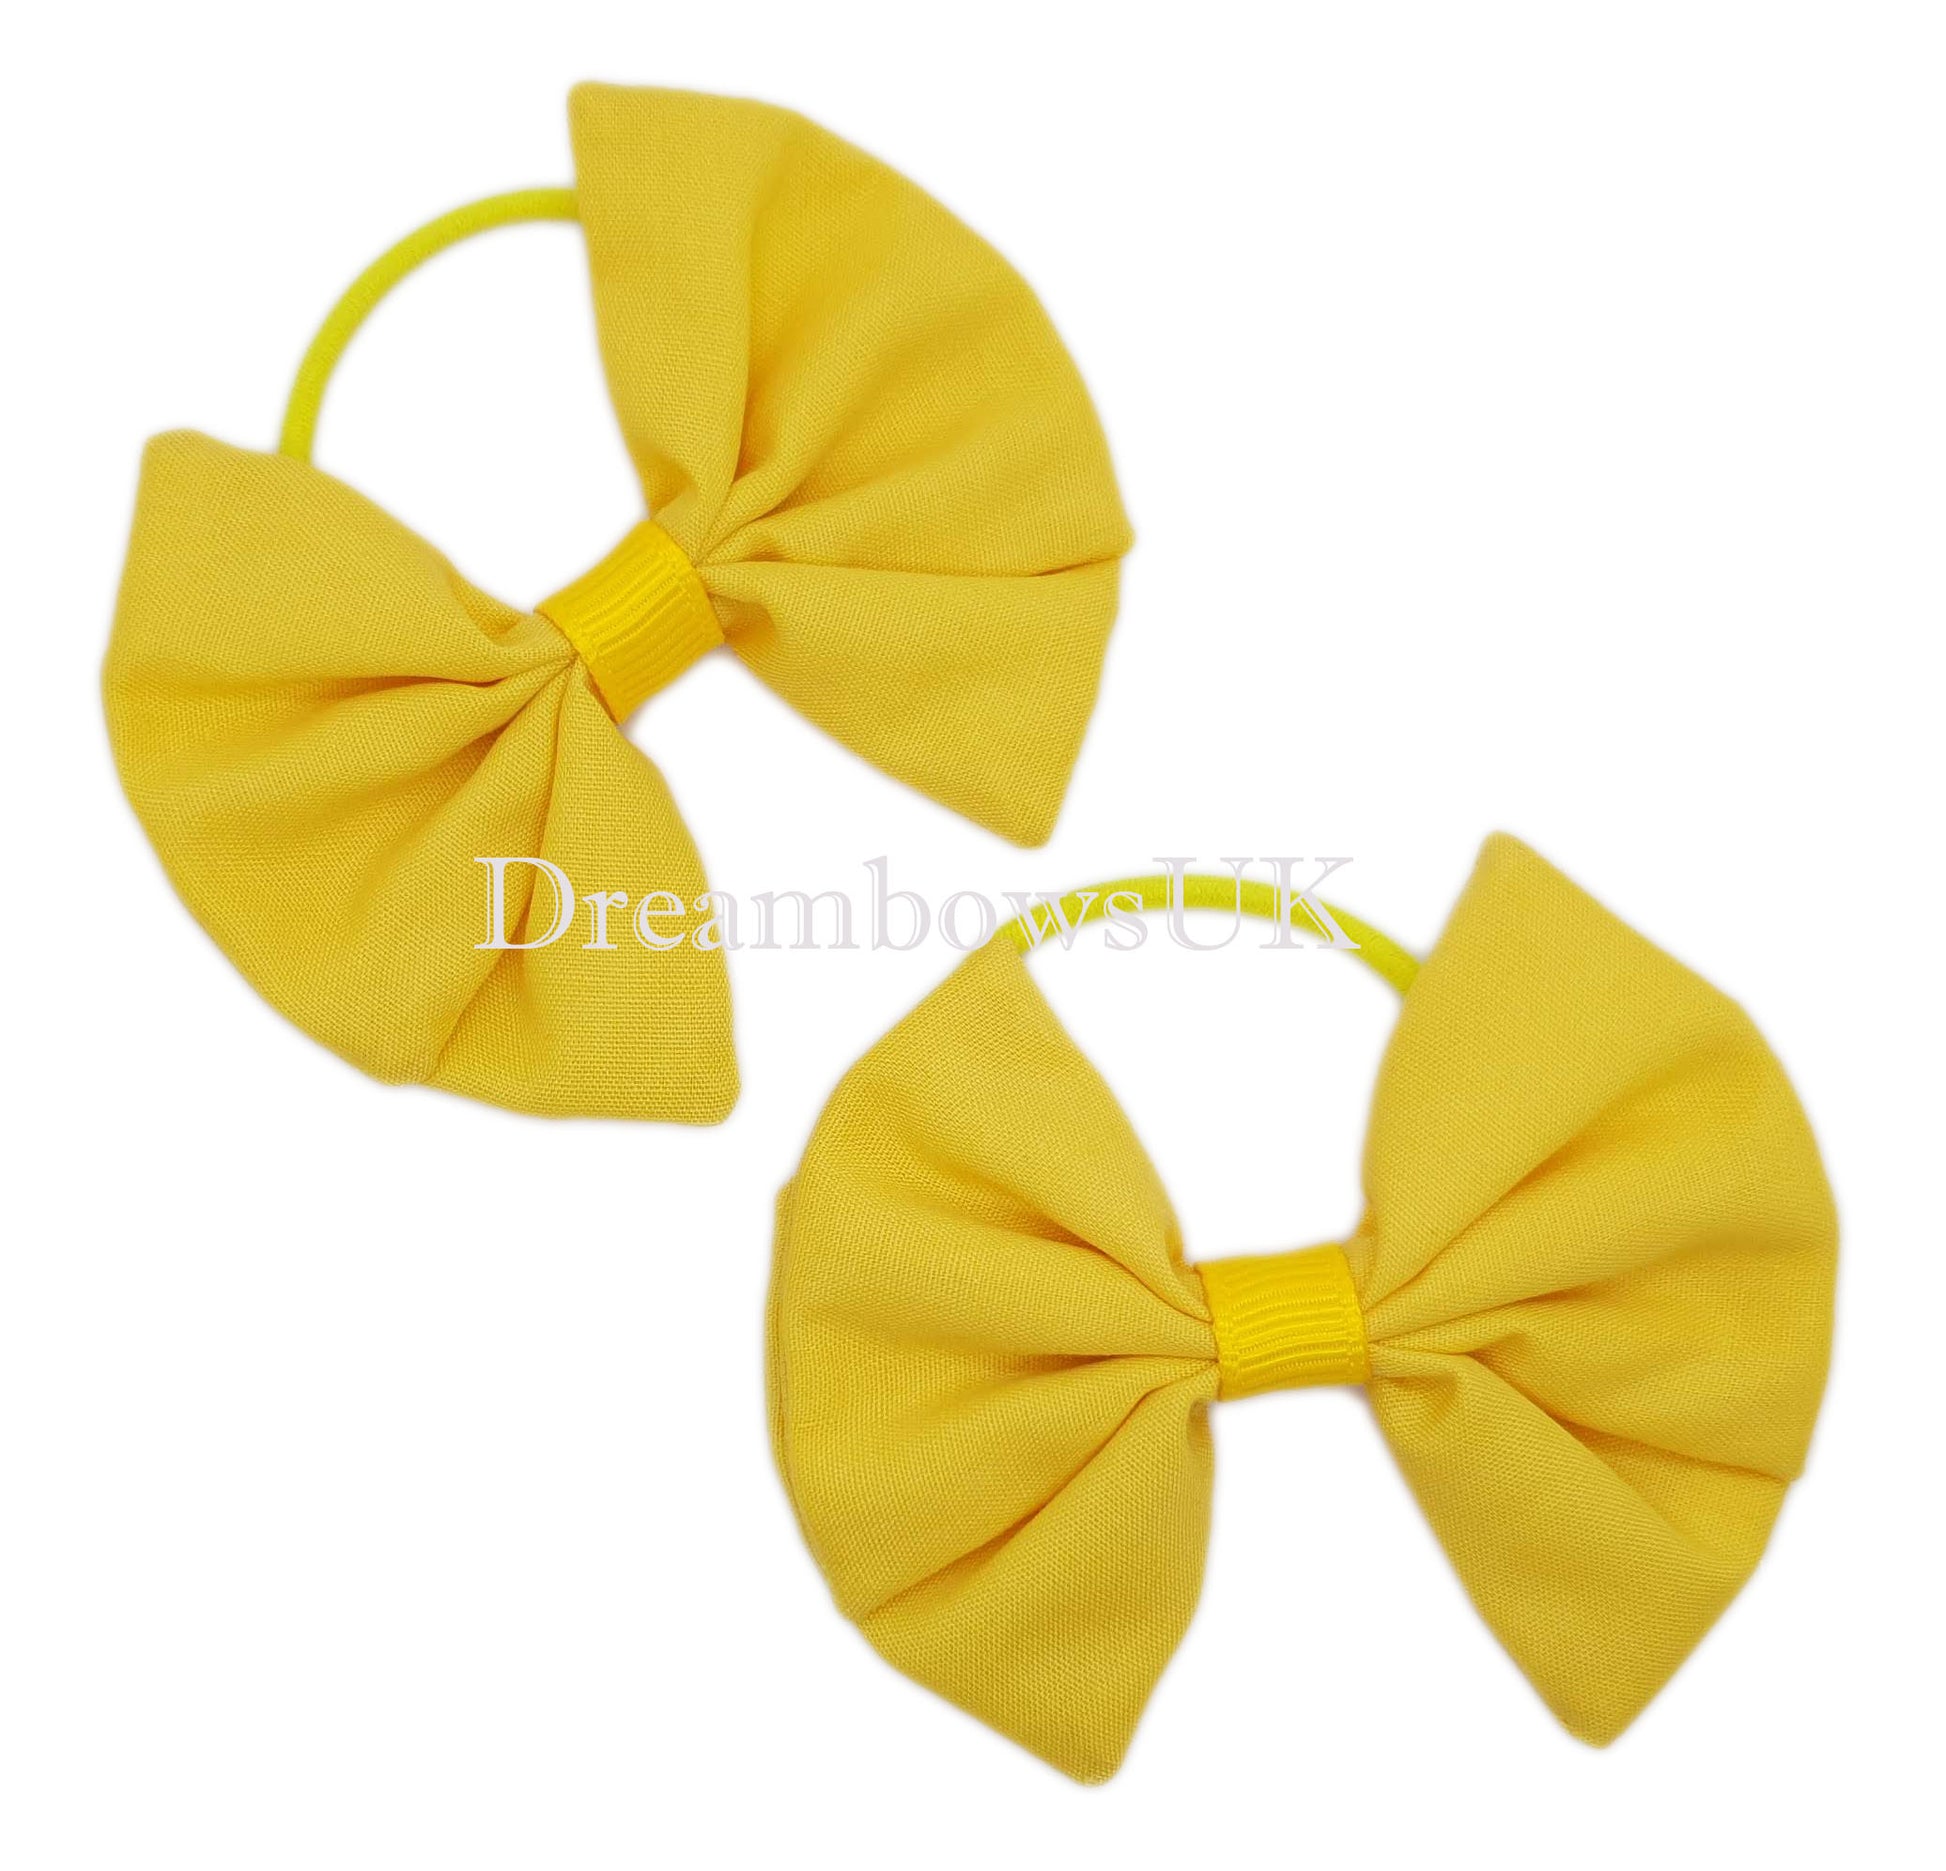 Golden yellow school bows on thin hair ties